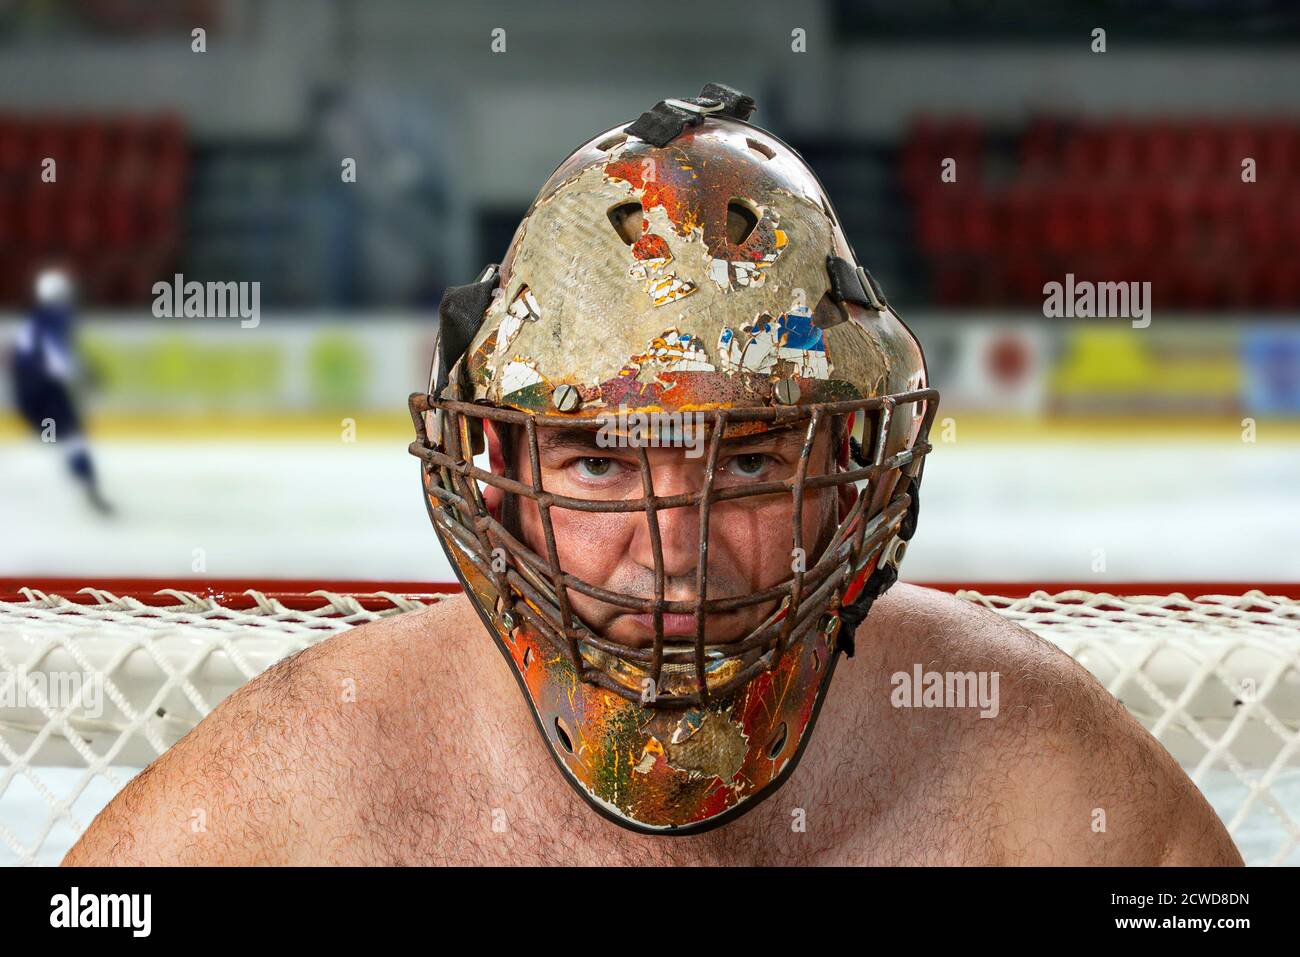 Goalie Hockey nella maschera. Portiere in una vecchia maschera da hockey  Foto stock - Alamy